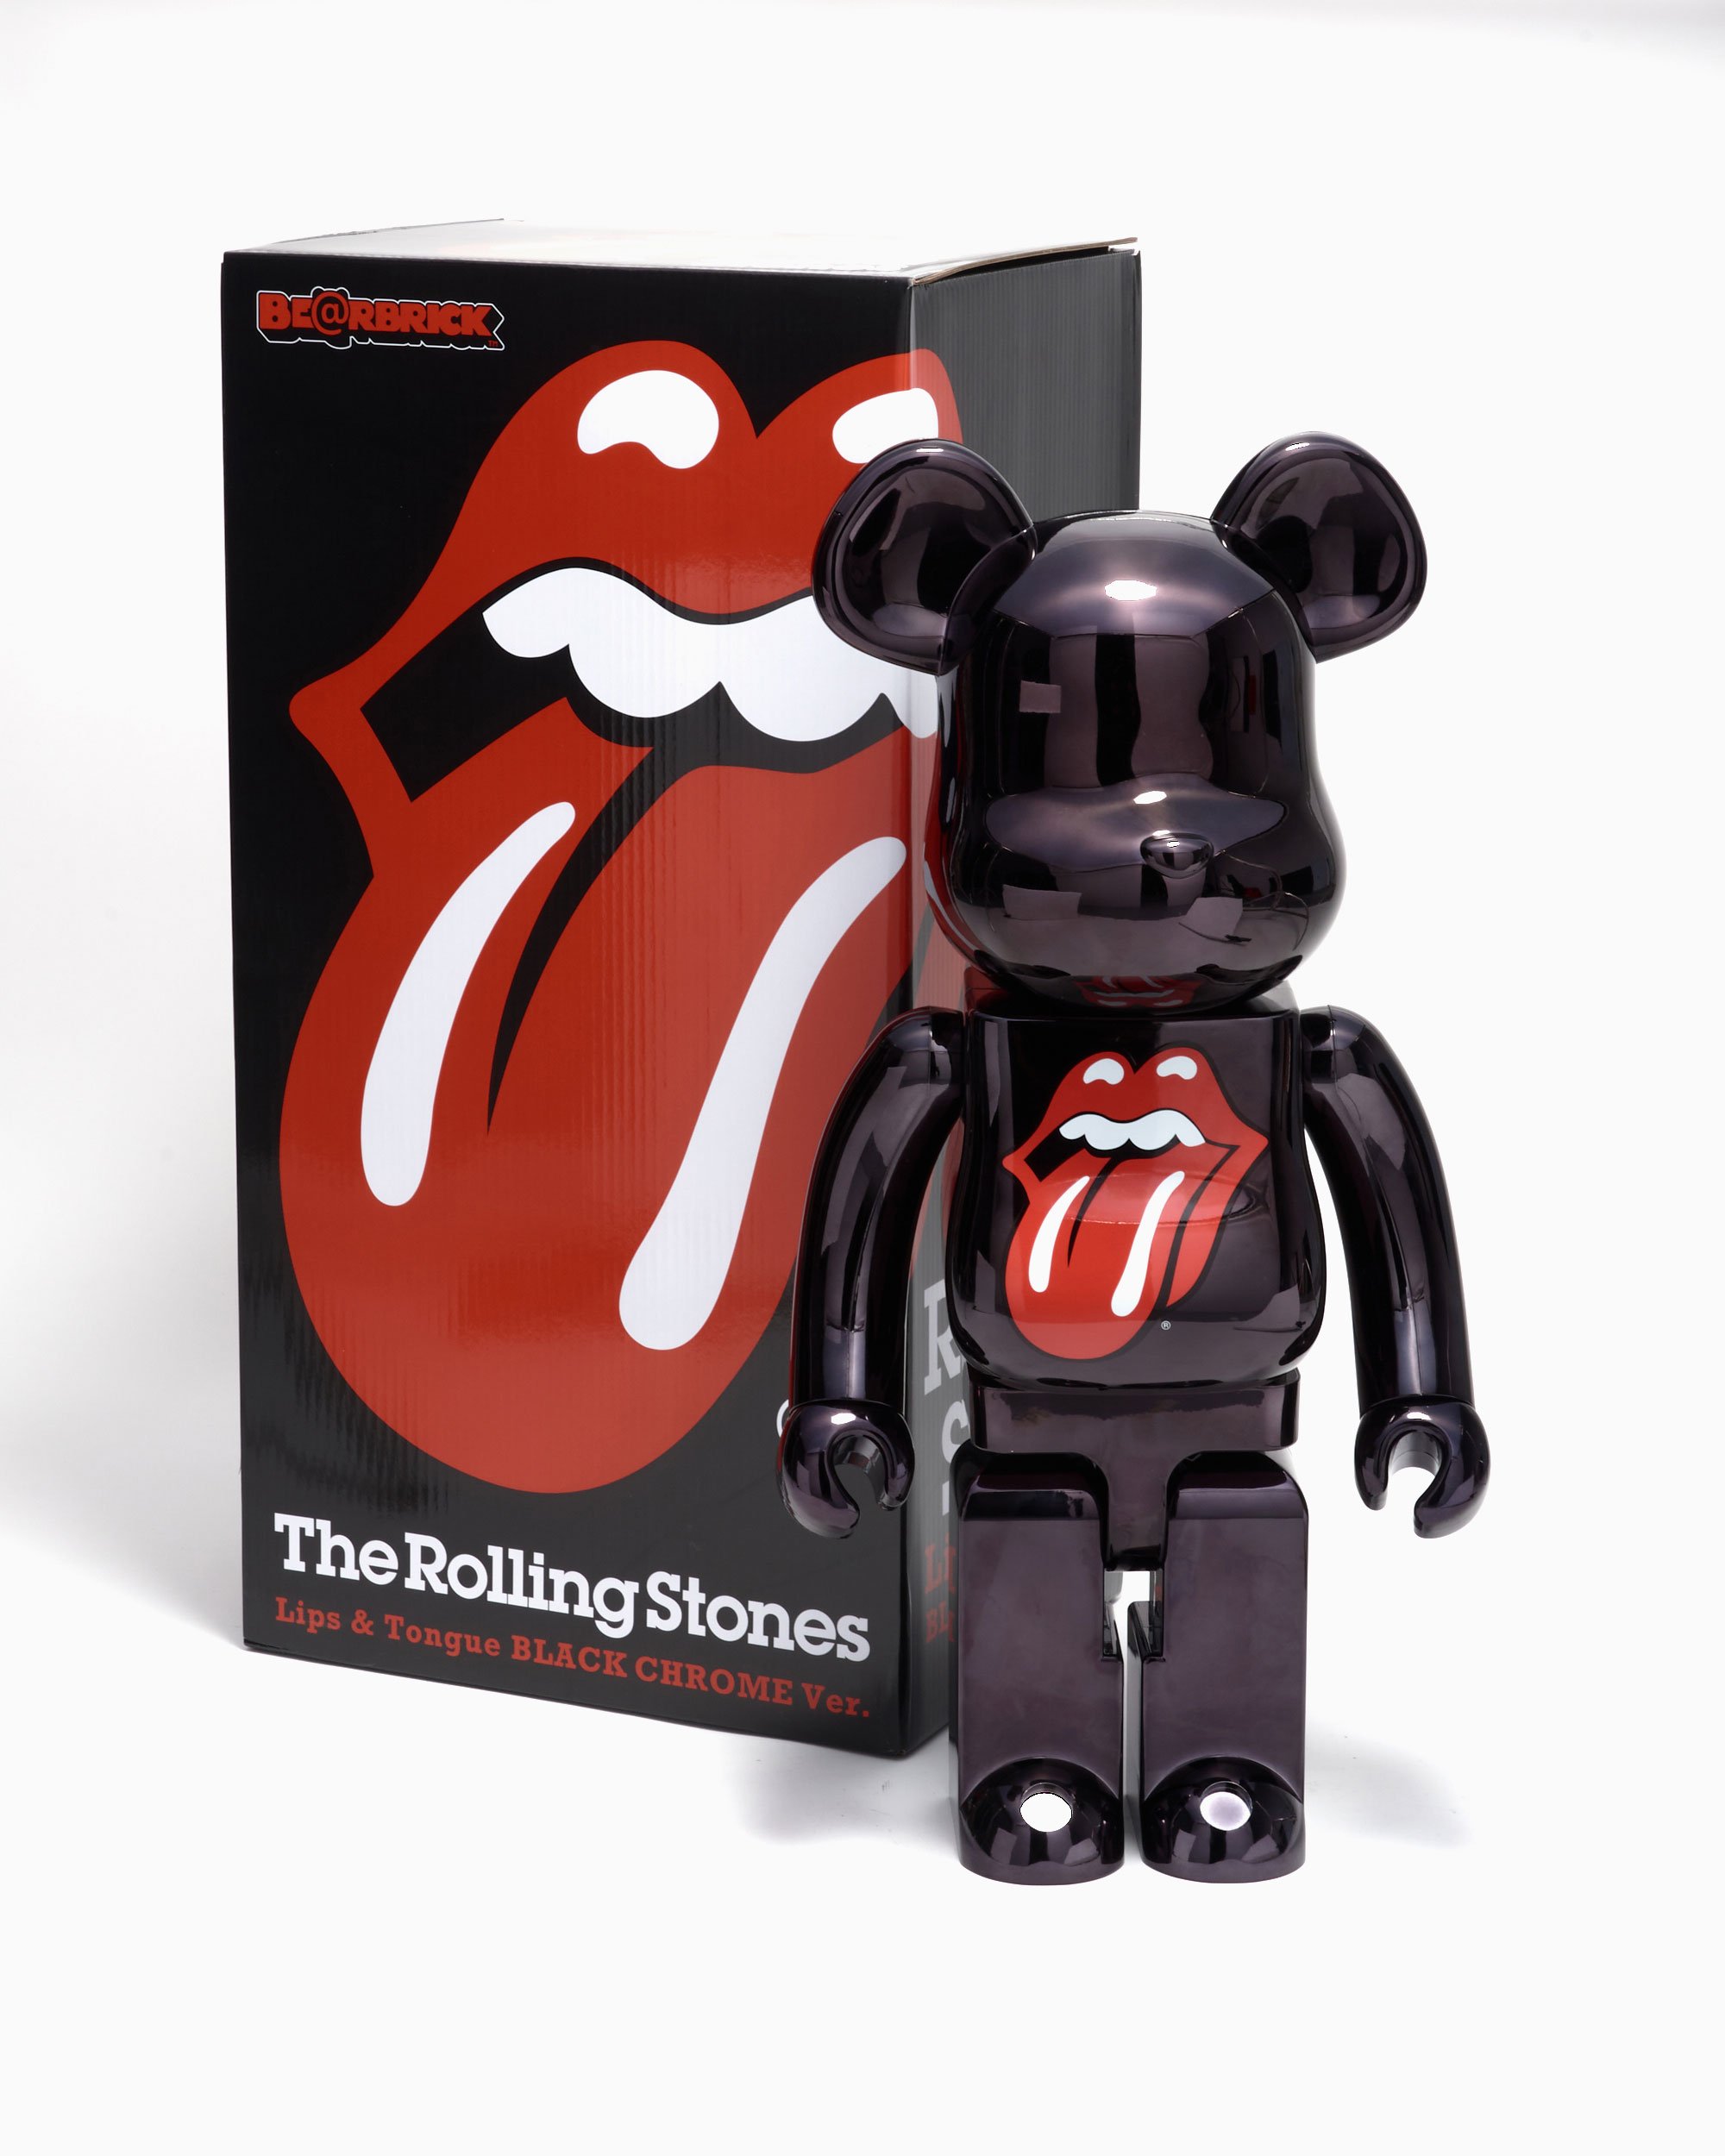 Medicom Toy Be@rbrick The Rolling Stones Lips &Tongue 1000% Black ...